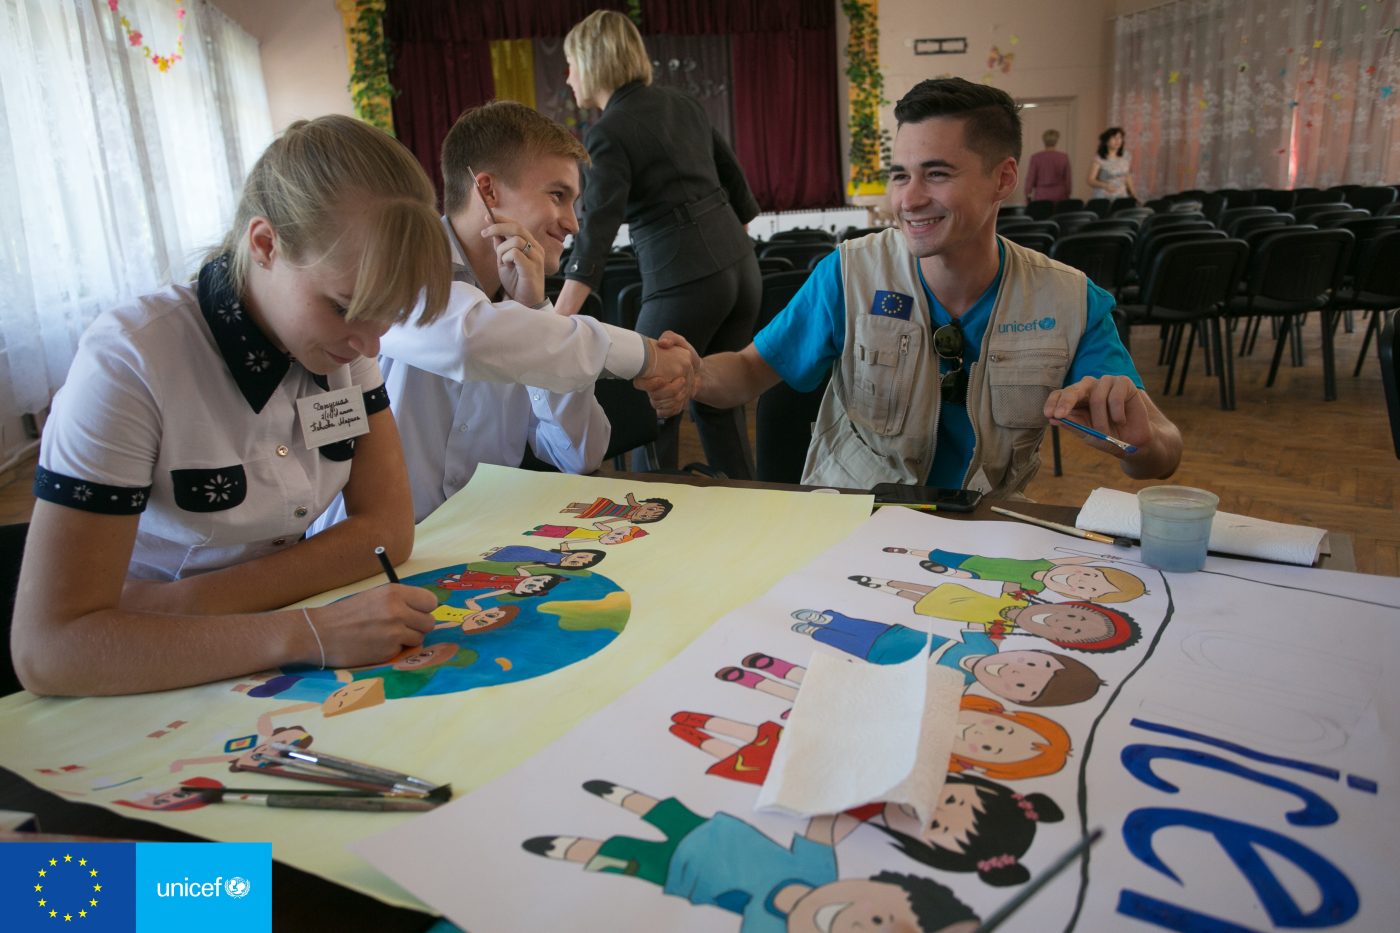 We travelled to Ukraine with UNICEF/EU team